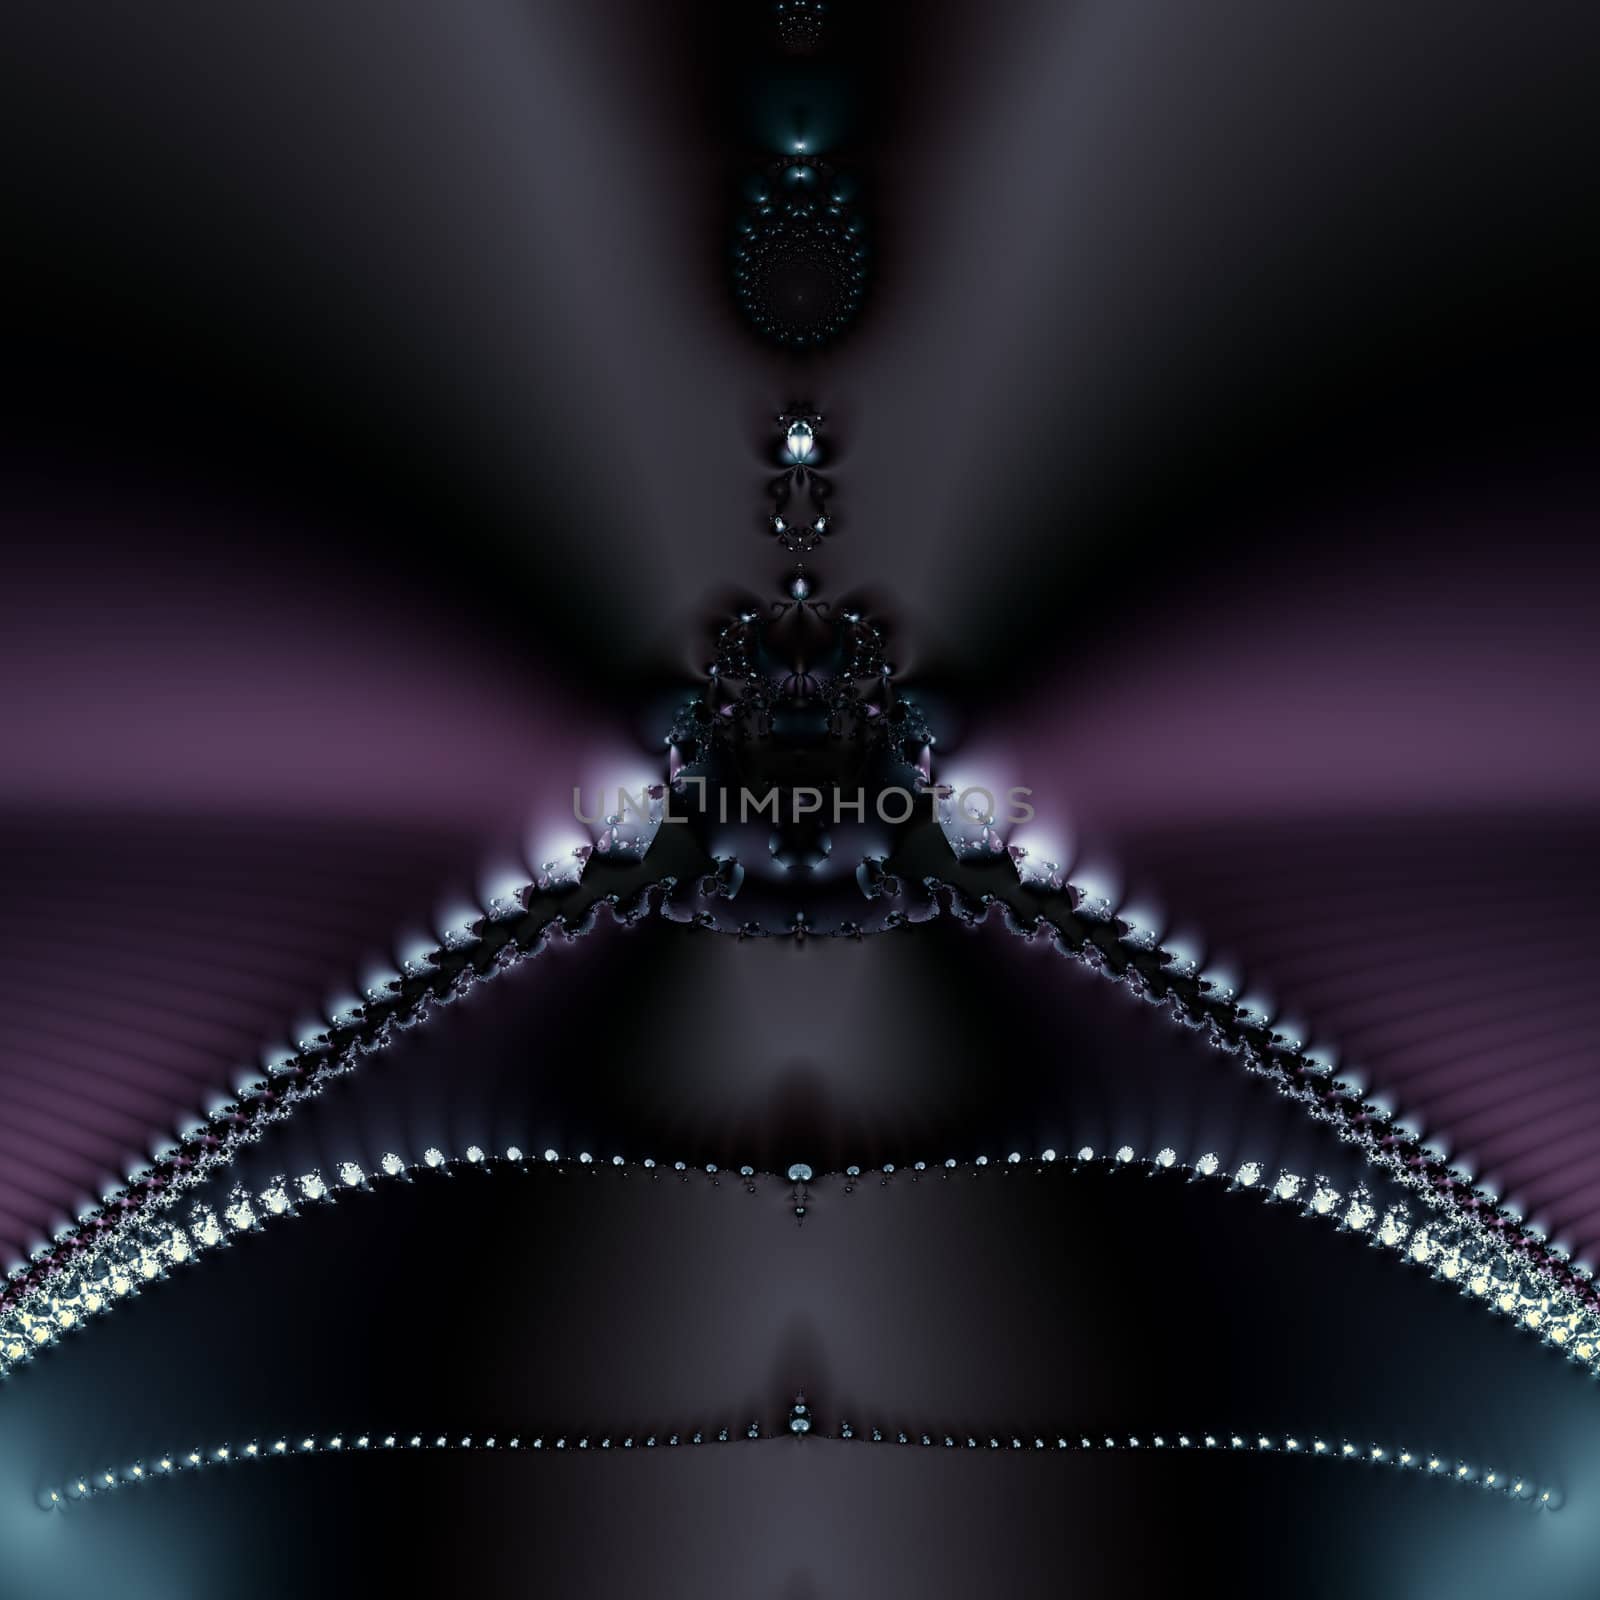 Elegant fractal design, abstract art, blue and purple polar lights